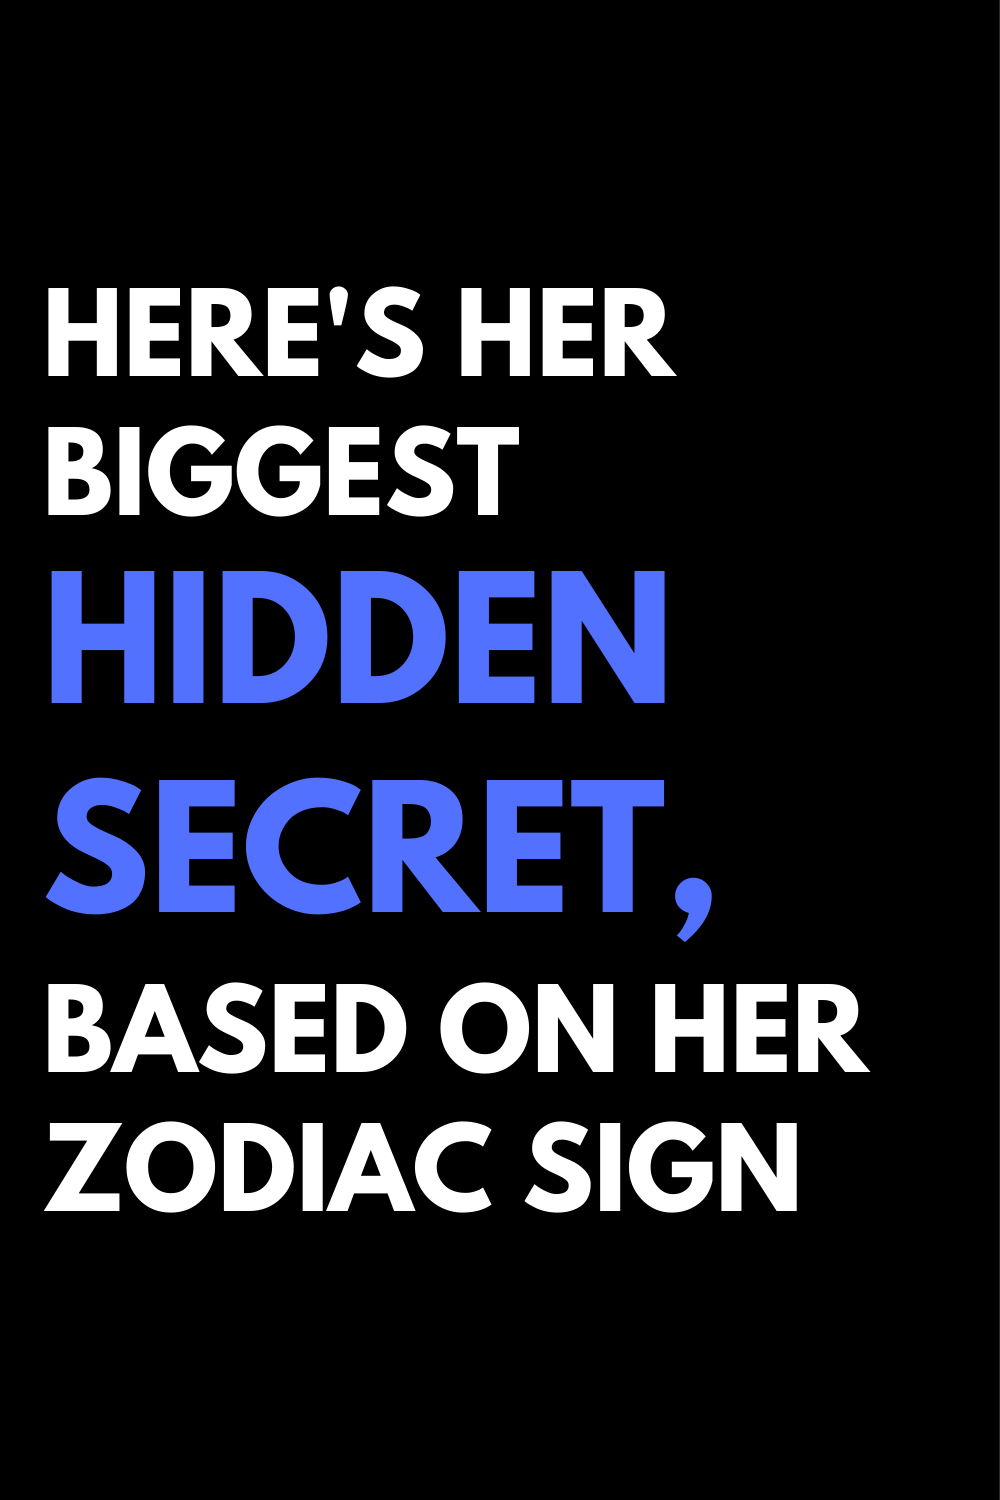 Here's Her Biggest Hidden Secret, Based On Her Zodiac Sign